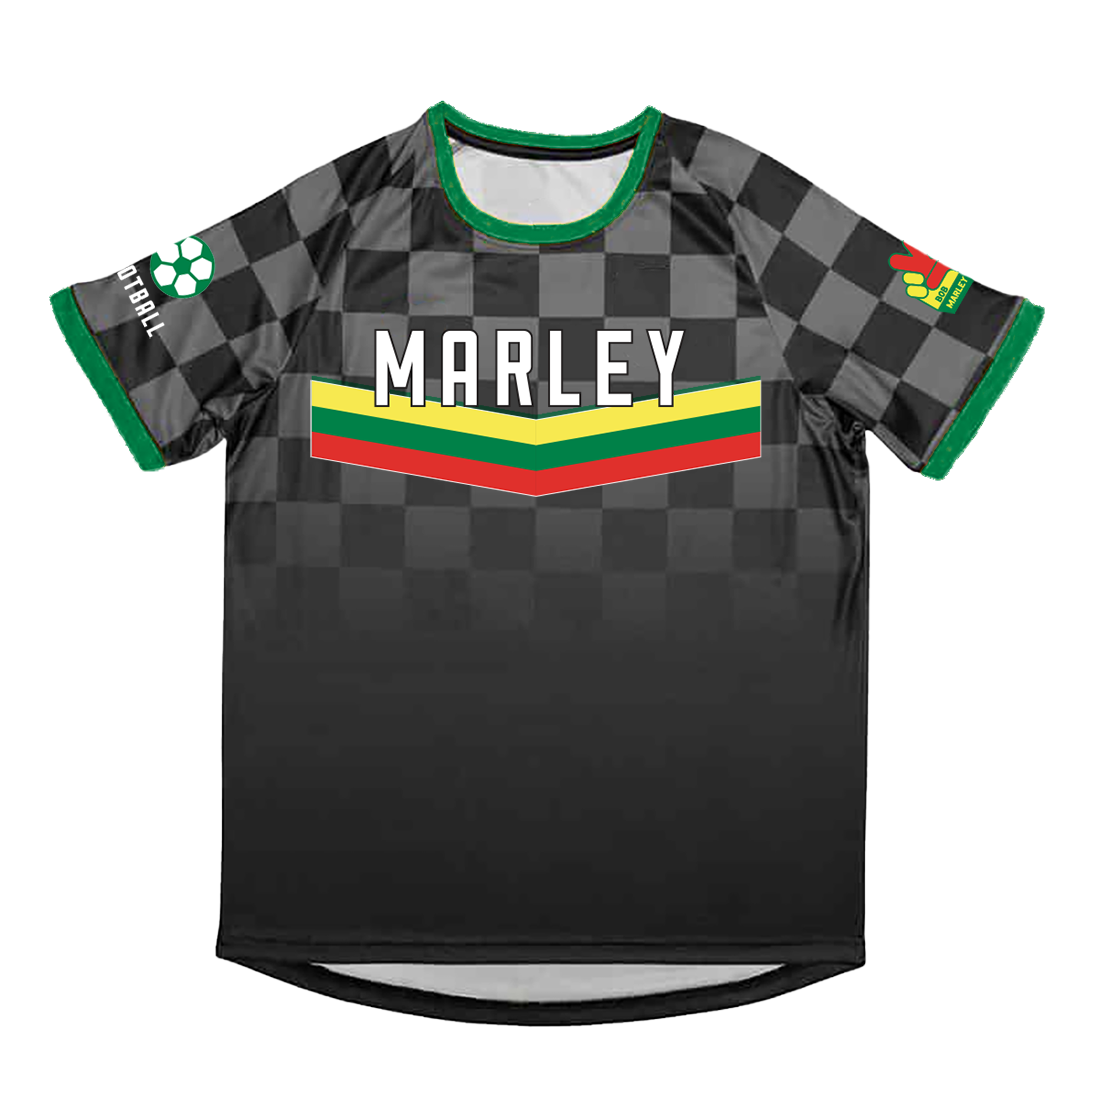 Bob Marley - Exodus Soccer Jersey